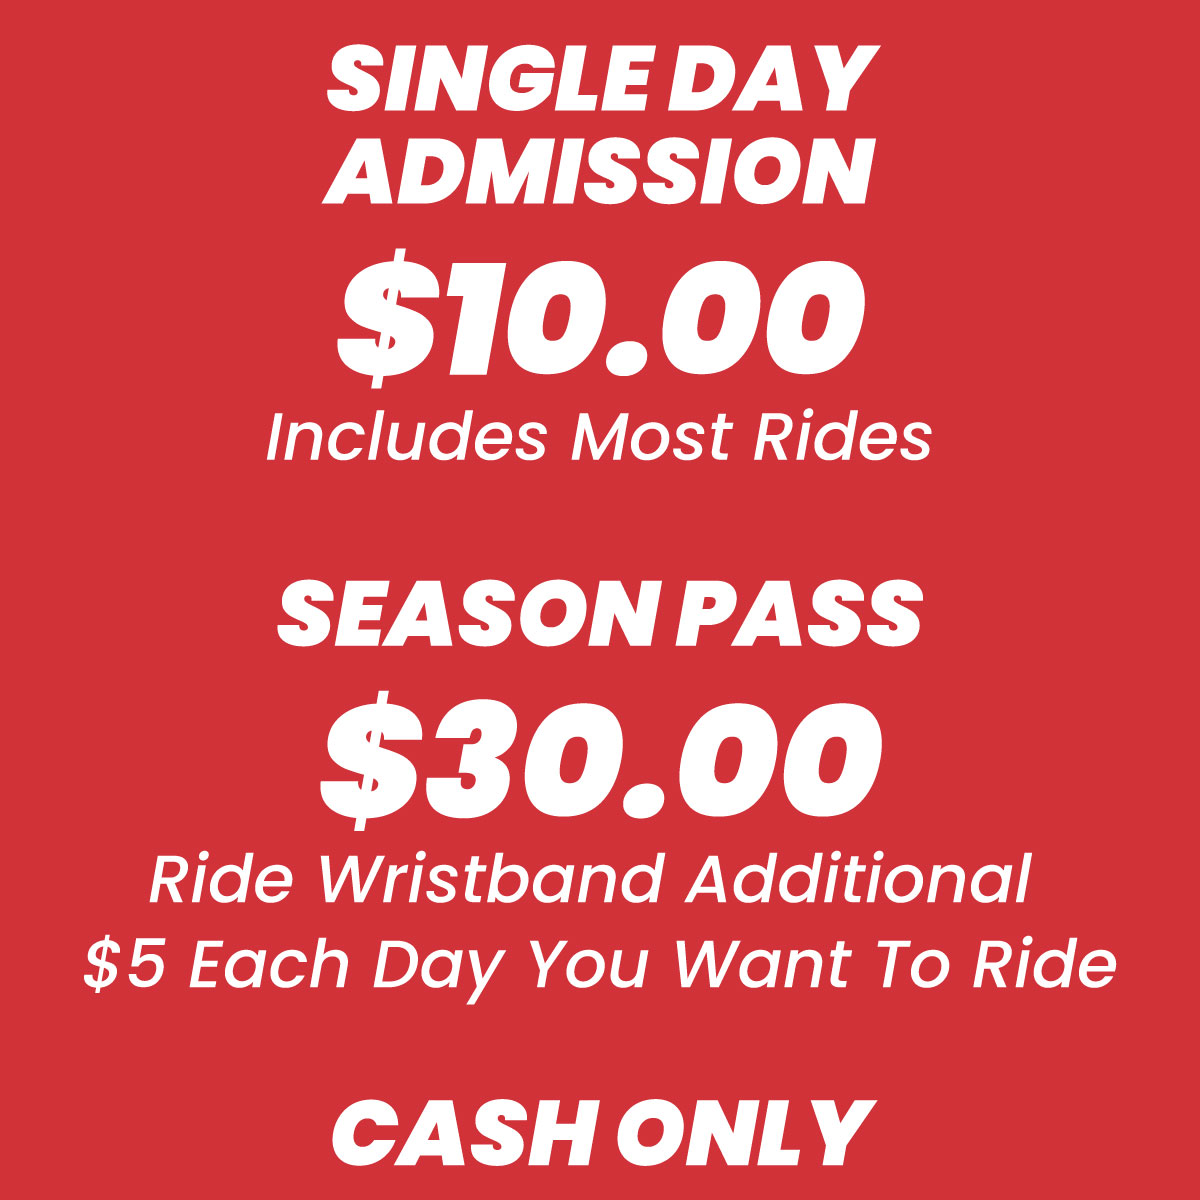 Clinton County Fair Ticket Prices: Single Day Admission $10, Season Pass $30